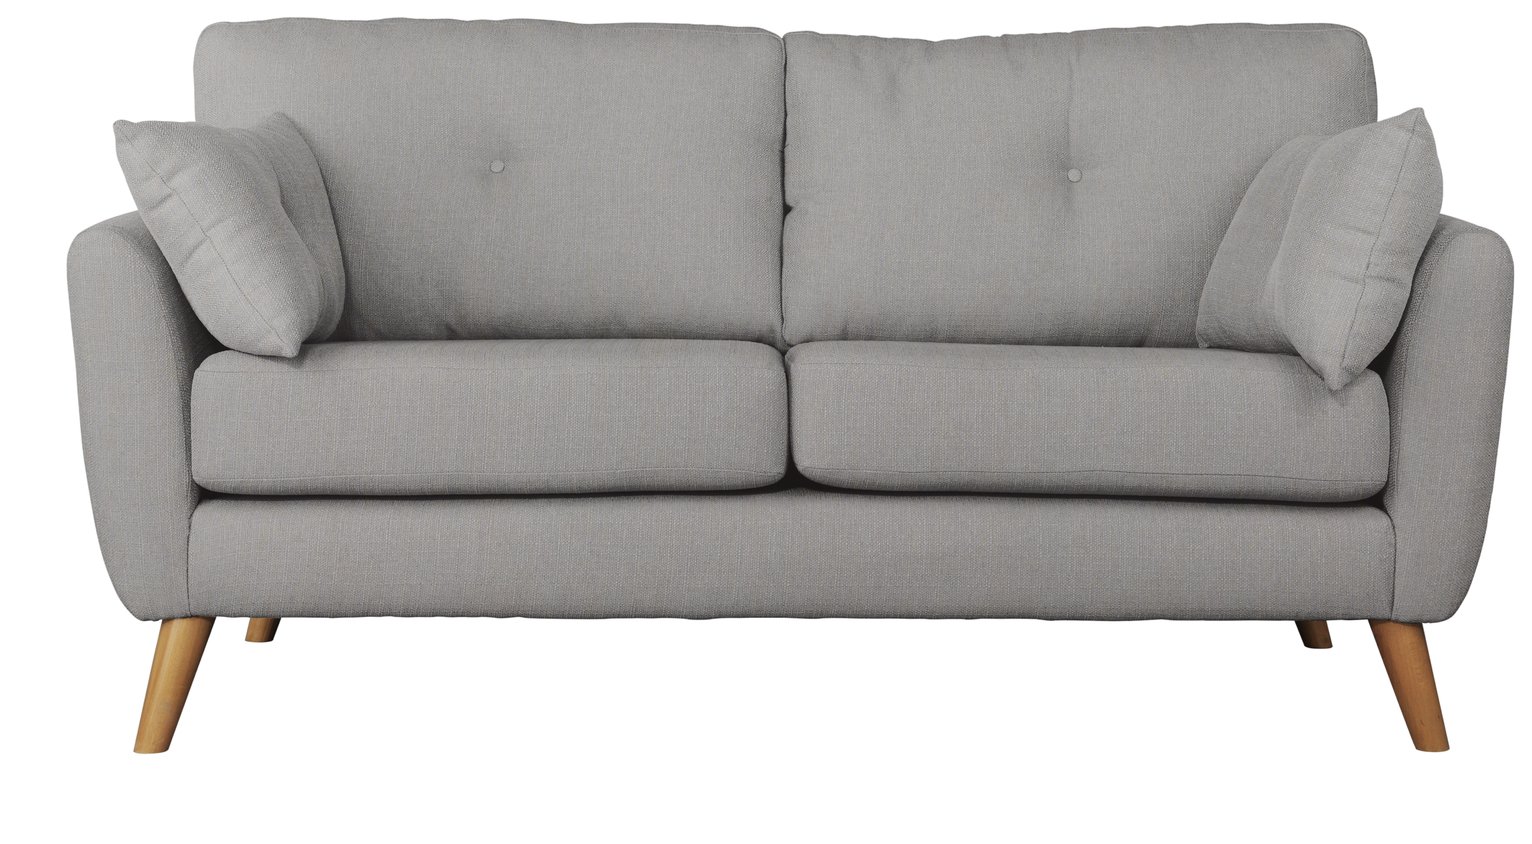 Argos Home Kari 3 Seater Fabric Sofa - Light Grey